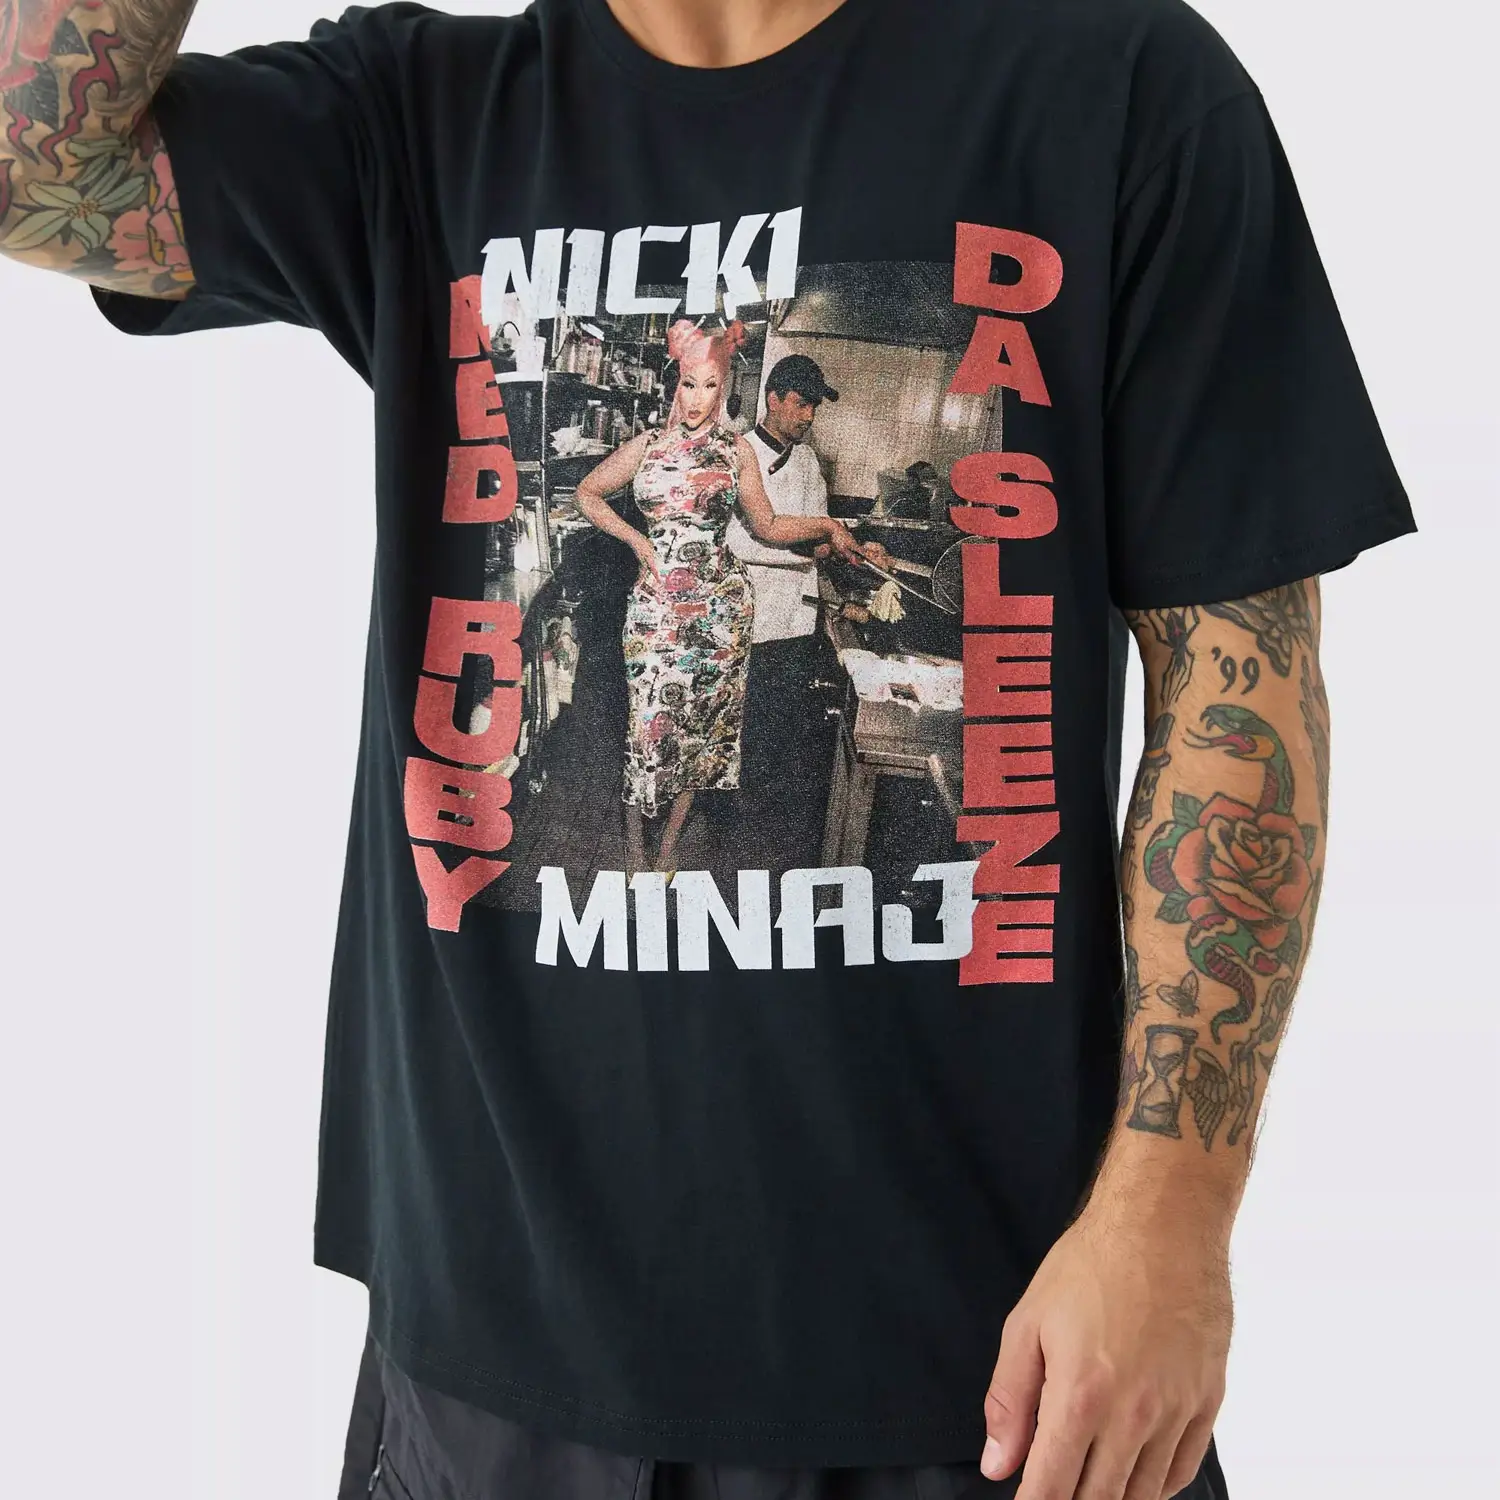 Authentic Loose Fit Nicki Minaj T-Shirt - Premium Jersey Fabric, Crew Neck, Short Sleeve Loose fit Nicki Minaj t-shirt